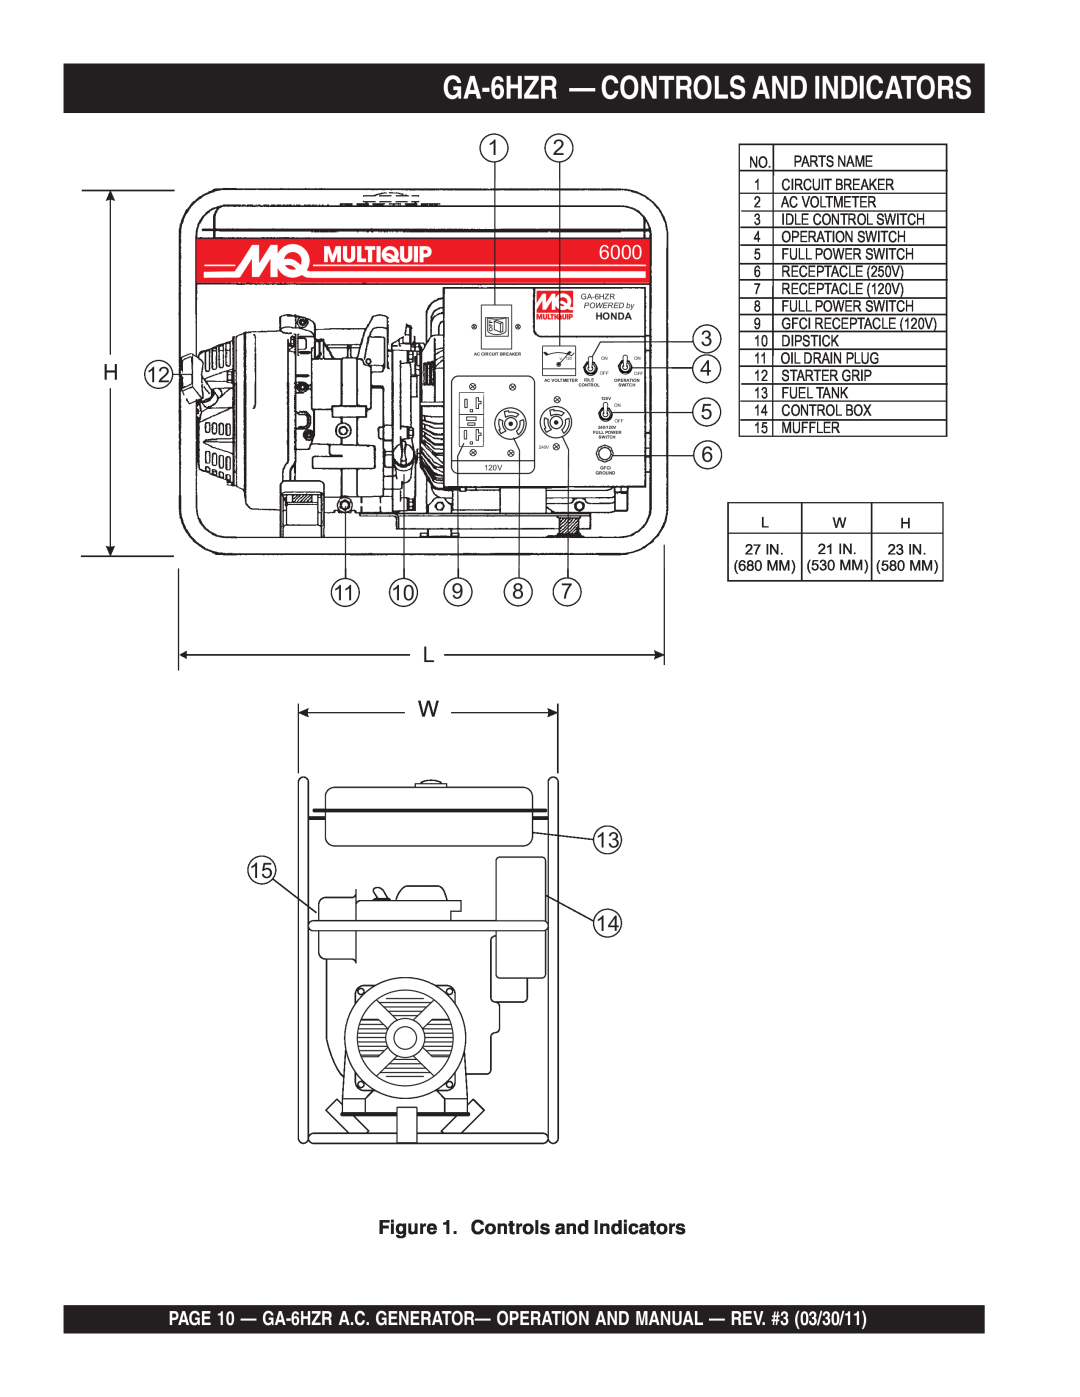 Multiquip GA6HZR manual GA-6HZR- CONTROLS AND INDICATORS 